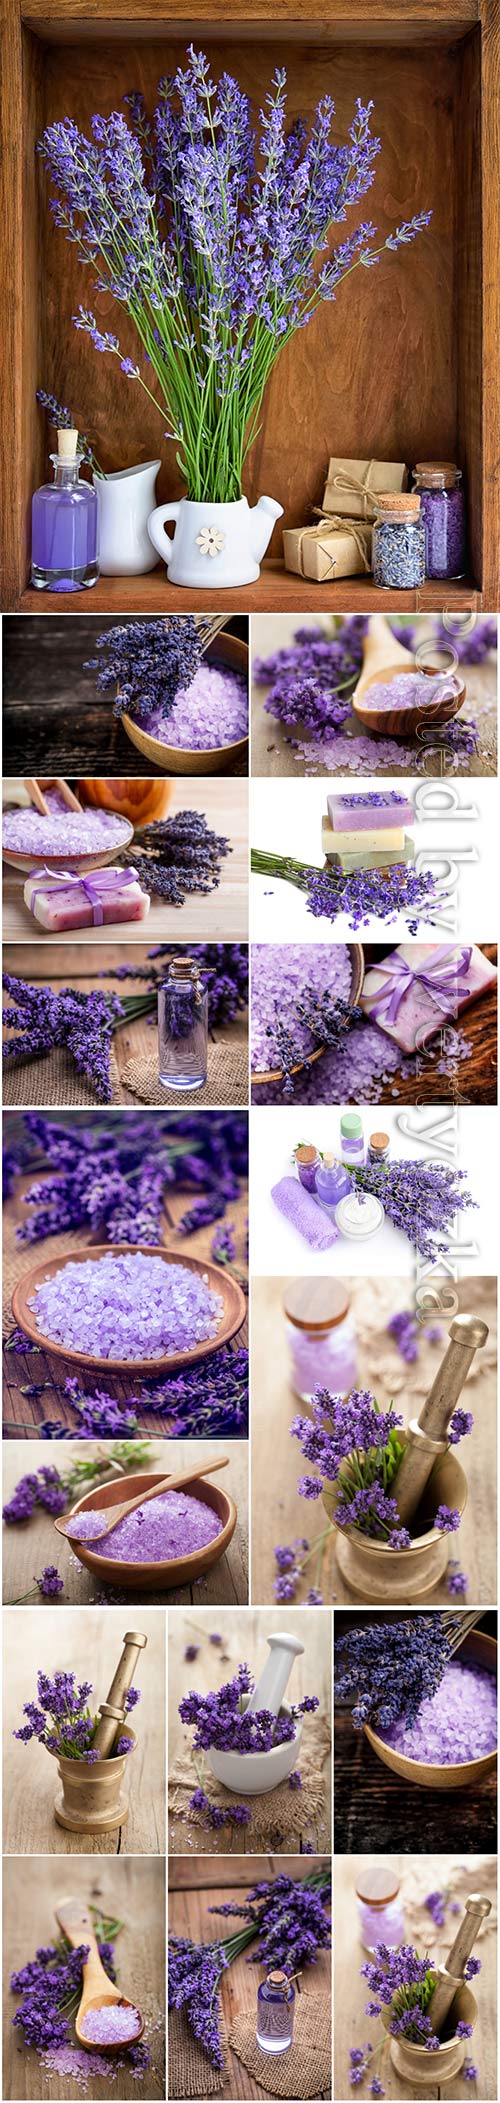 Lavender, spa concept beautiful stock photo